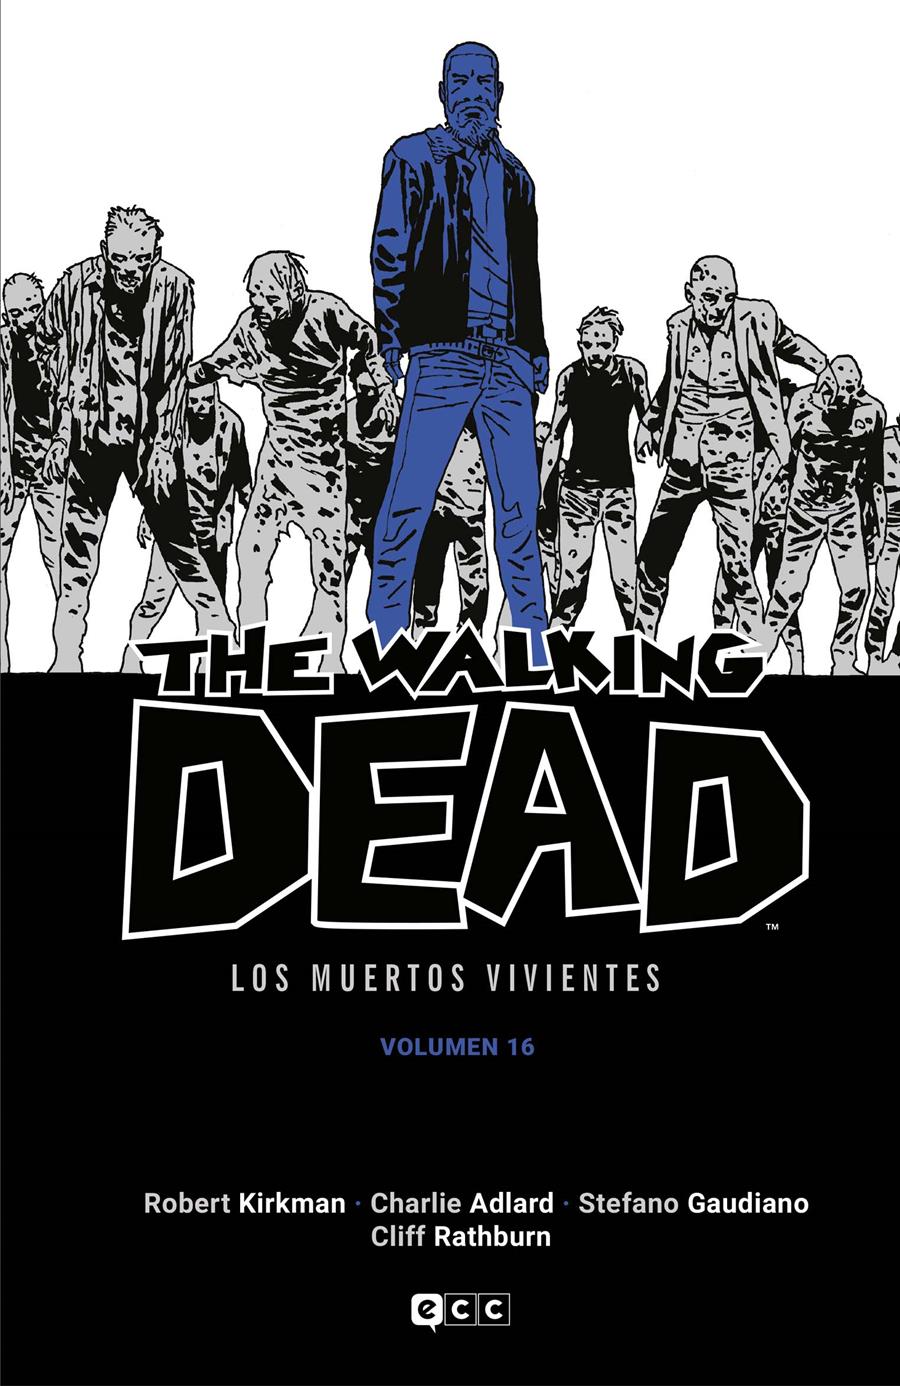 The Walking Dead (Los muertos vivientes) vol. 16 de 16 | N0723-ECC40 | Charlie Adlard / Robert Kirkman | Terra de Còmic - Tu tienda de cómics online especializada en cómics, manga y merchandising